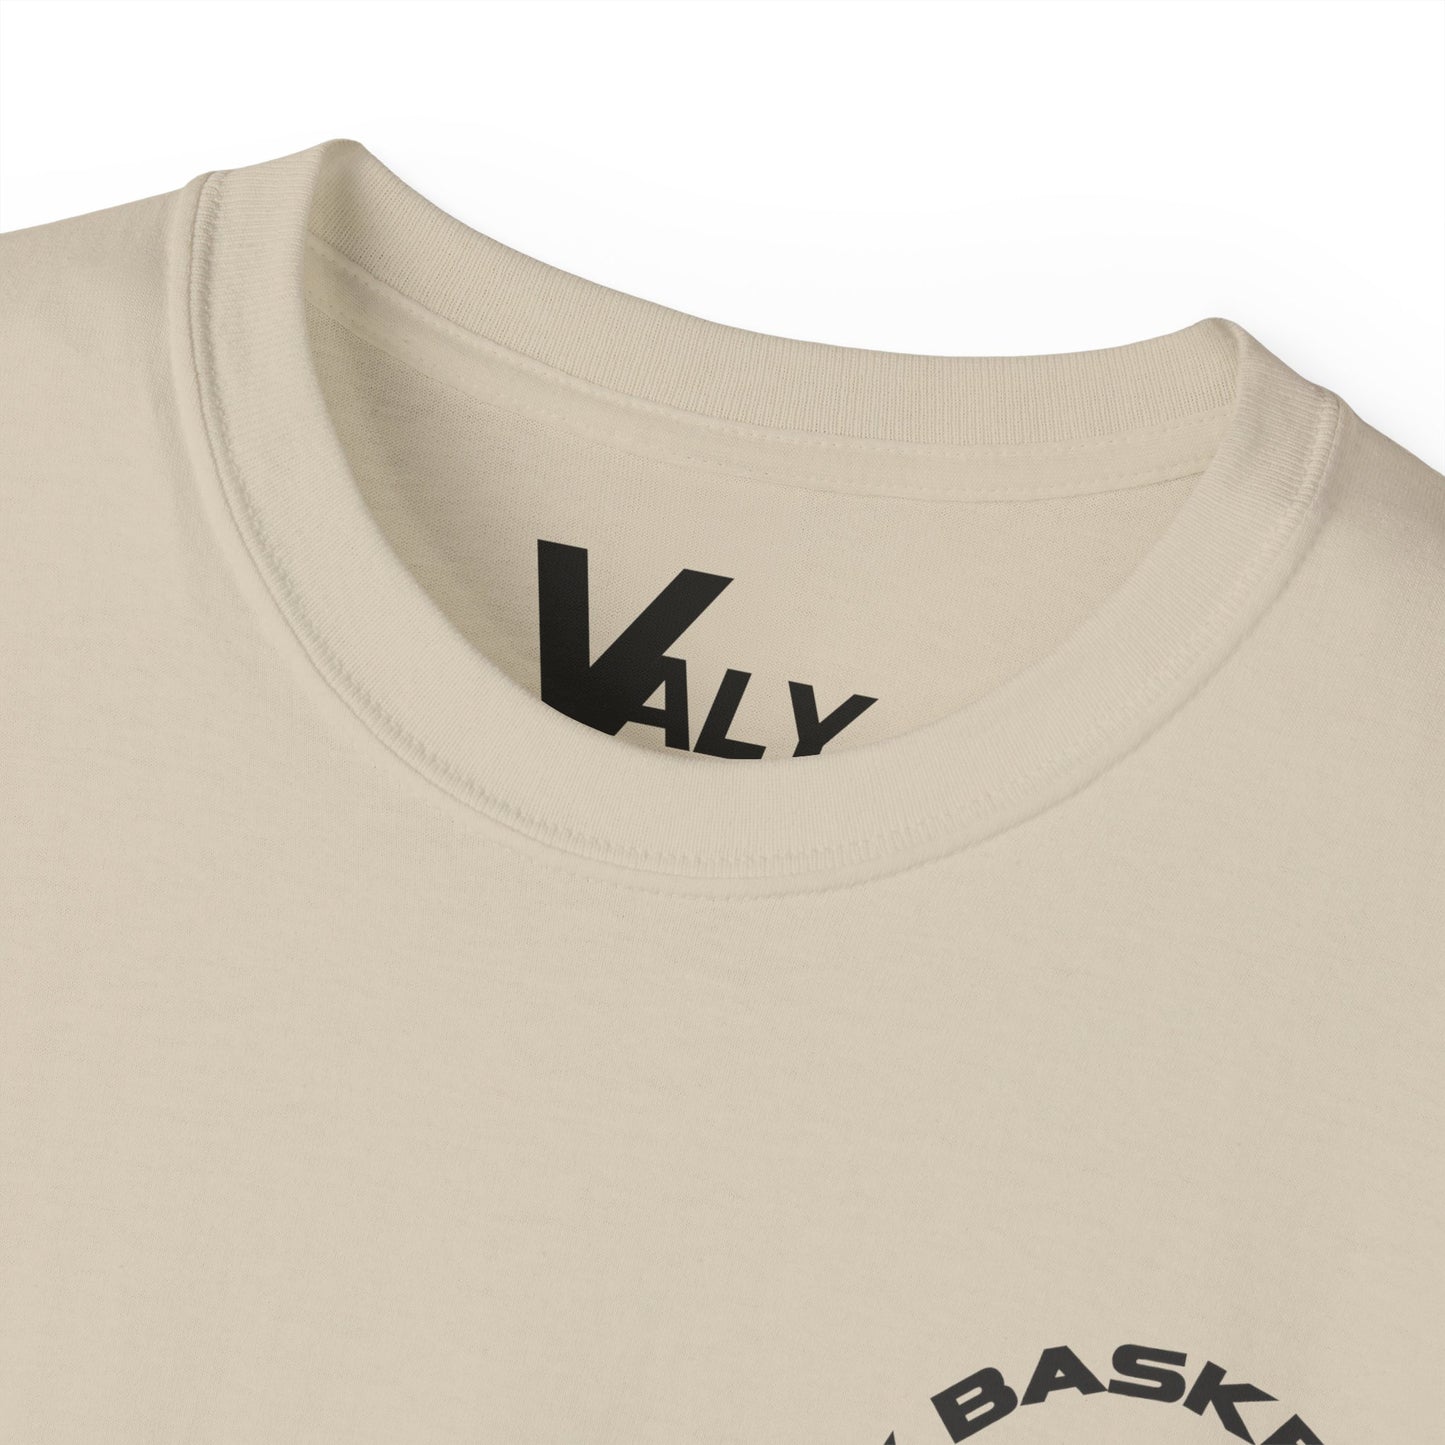 VALY Baller Series - SAND